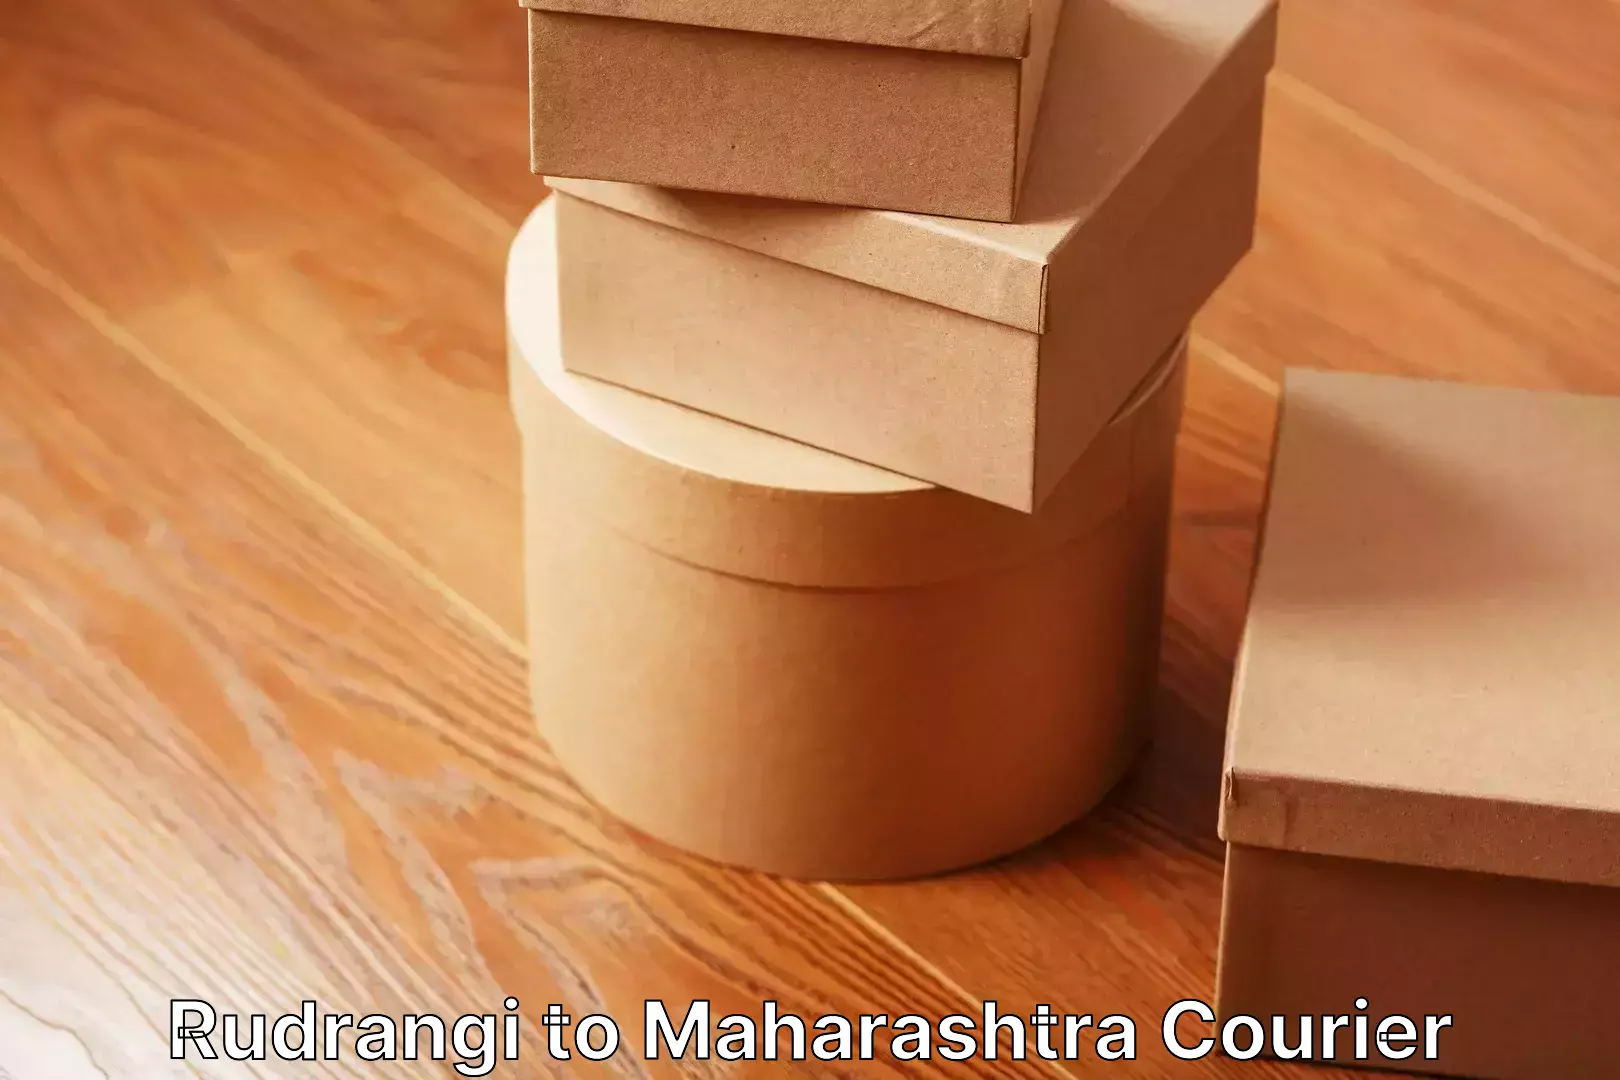 Trusted relocation experts Rudrangi to Maharashtra